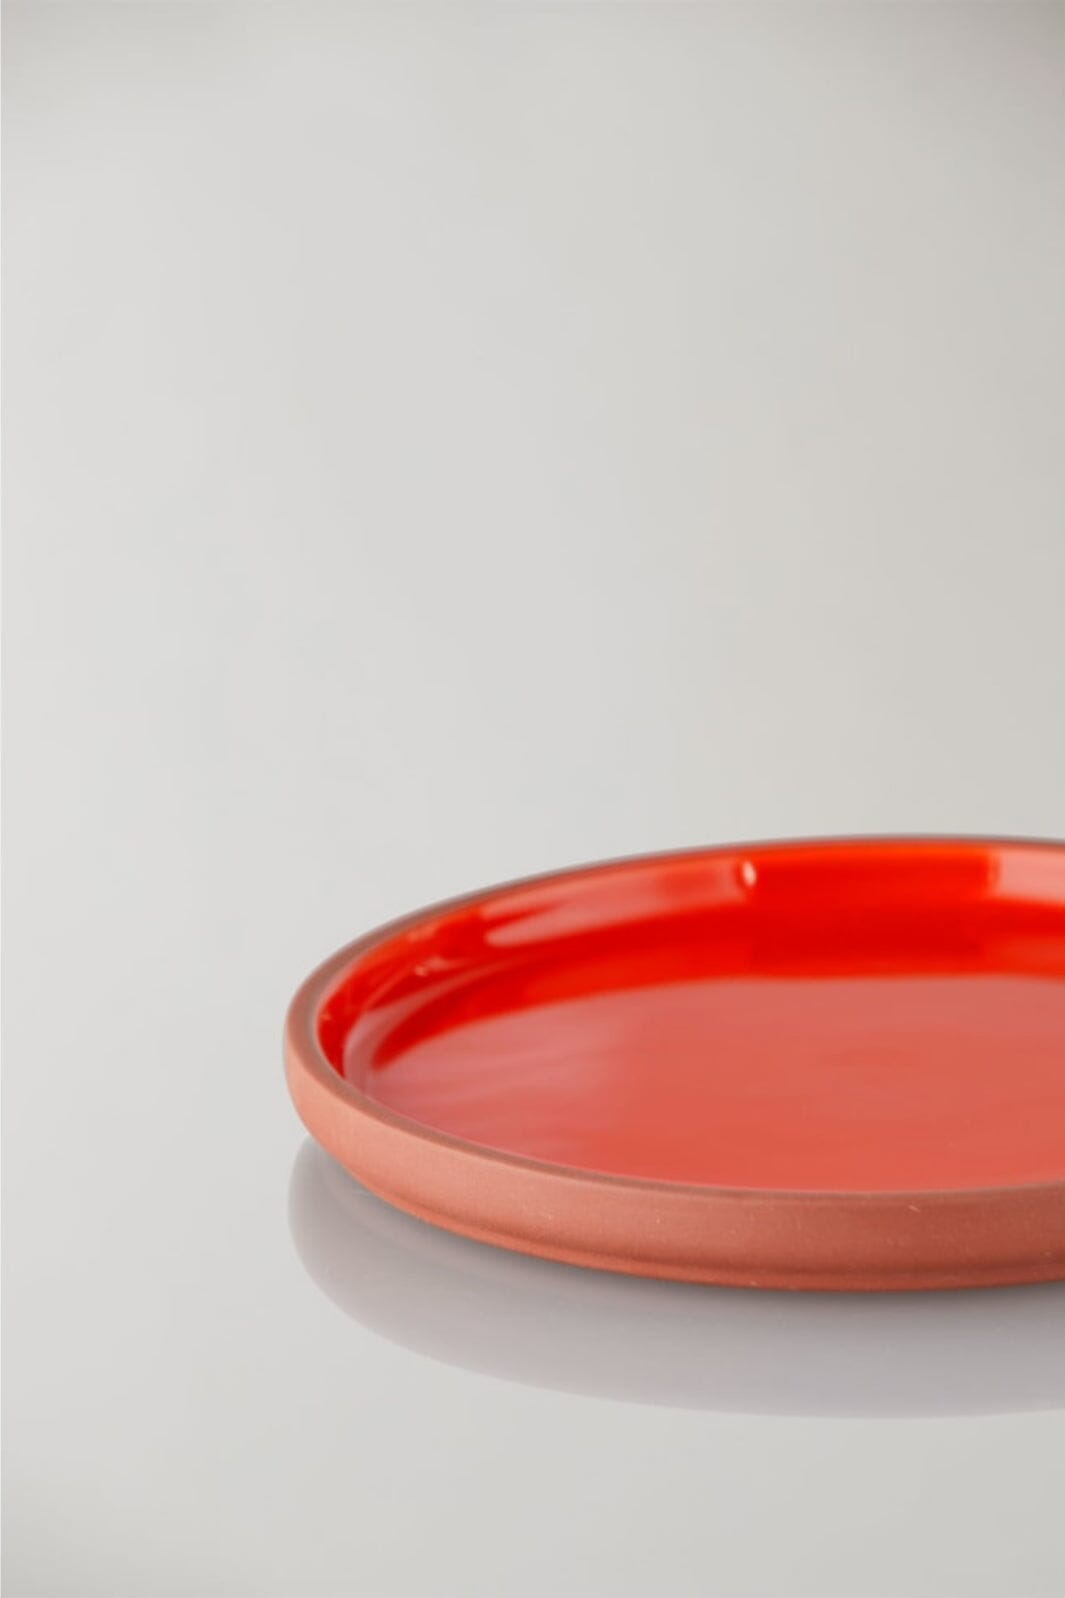 Studio About - Clayware, Plate, Medium, 2 Pcs, Terracotta/Red, 18515Tr Køkkentilbehør 